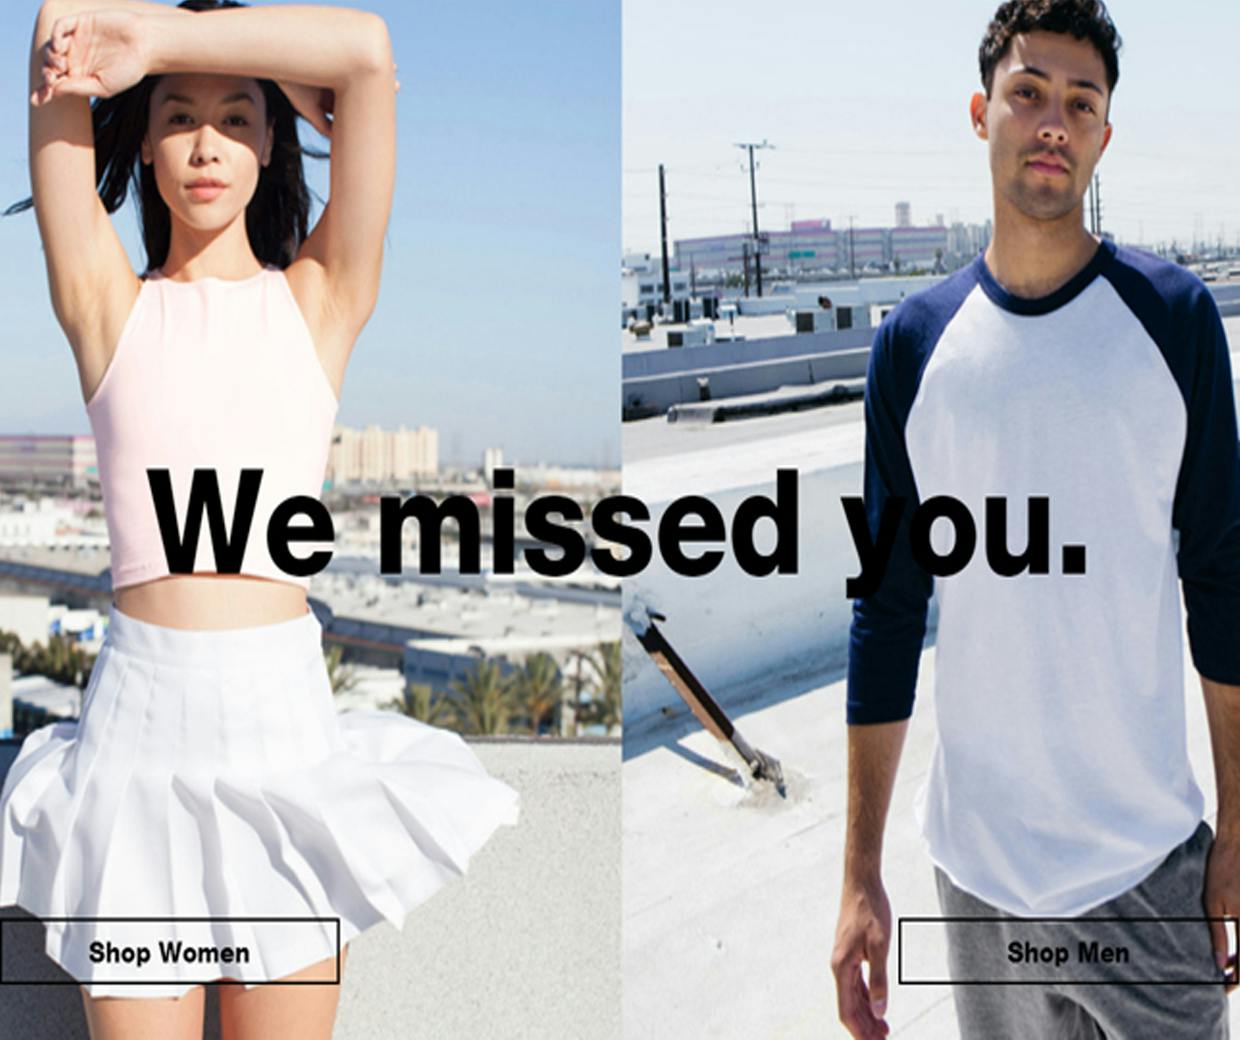 american apparel sexist ads